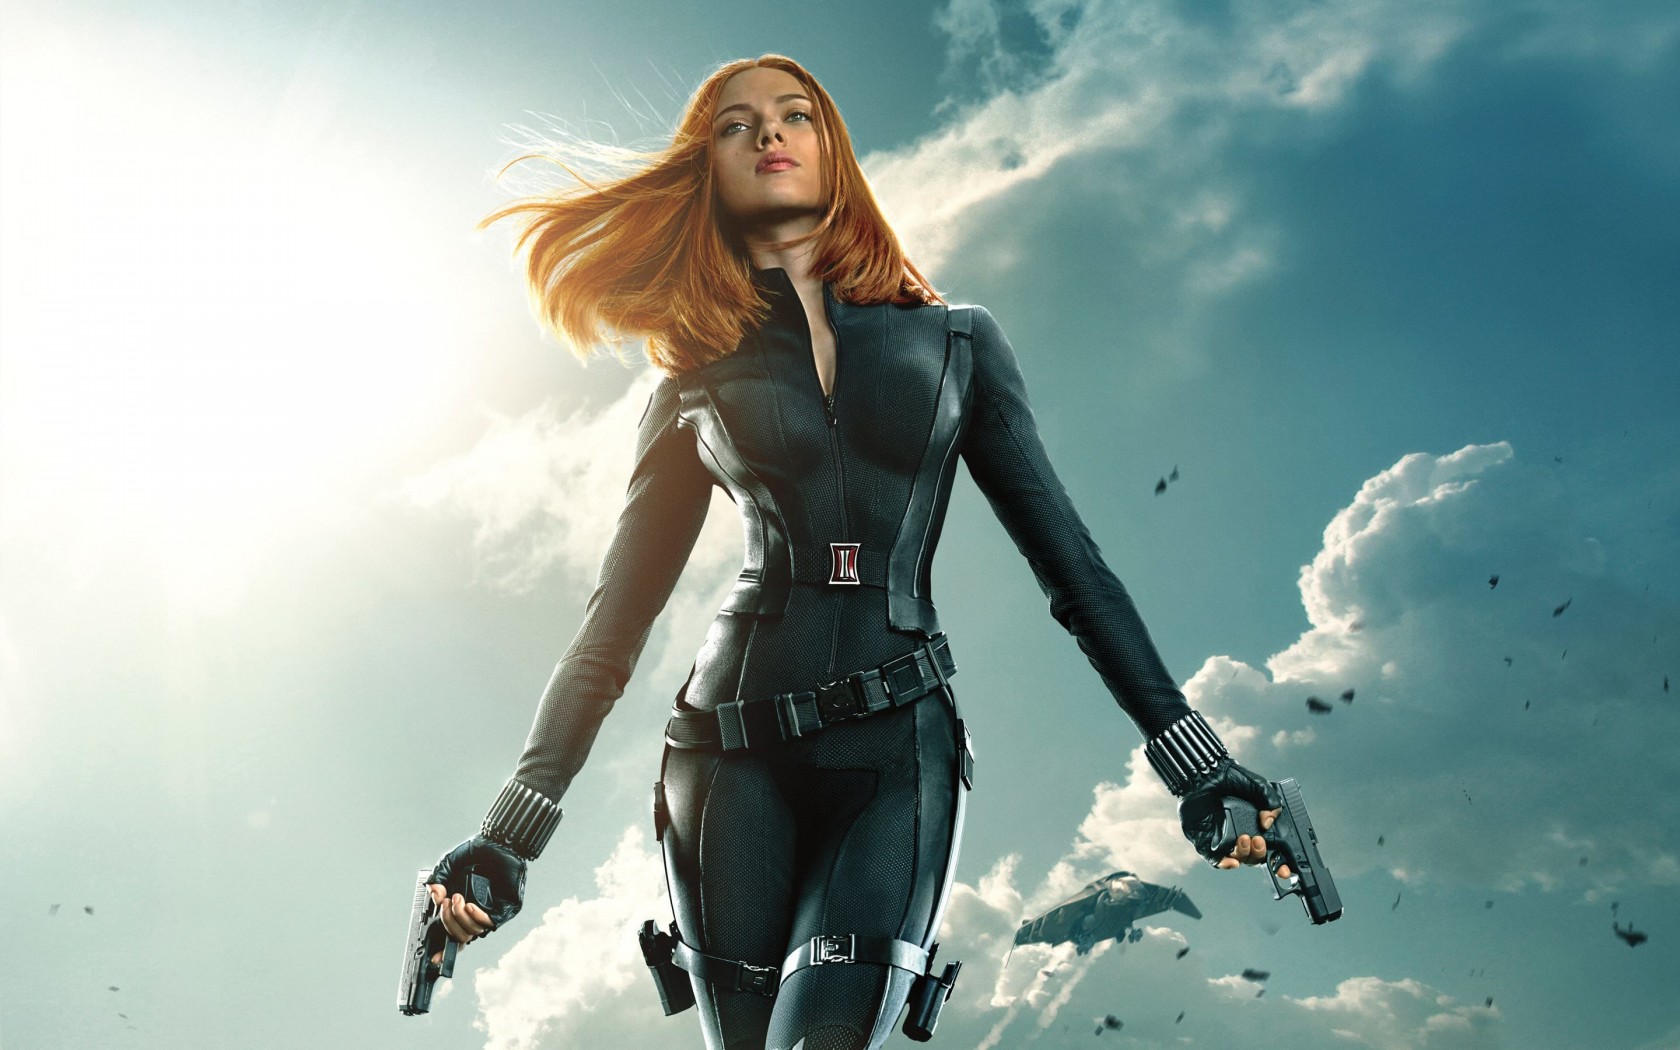 Scarlett Johansson in "Captain America: The Winter Soldier" Wallpaper for Desktop 1680x1050